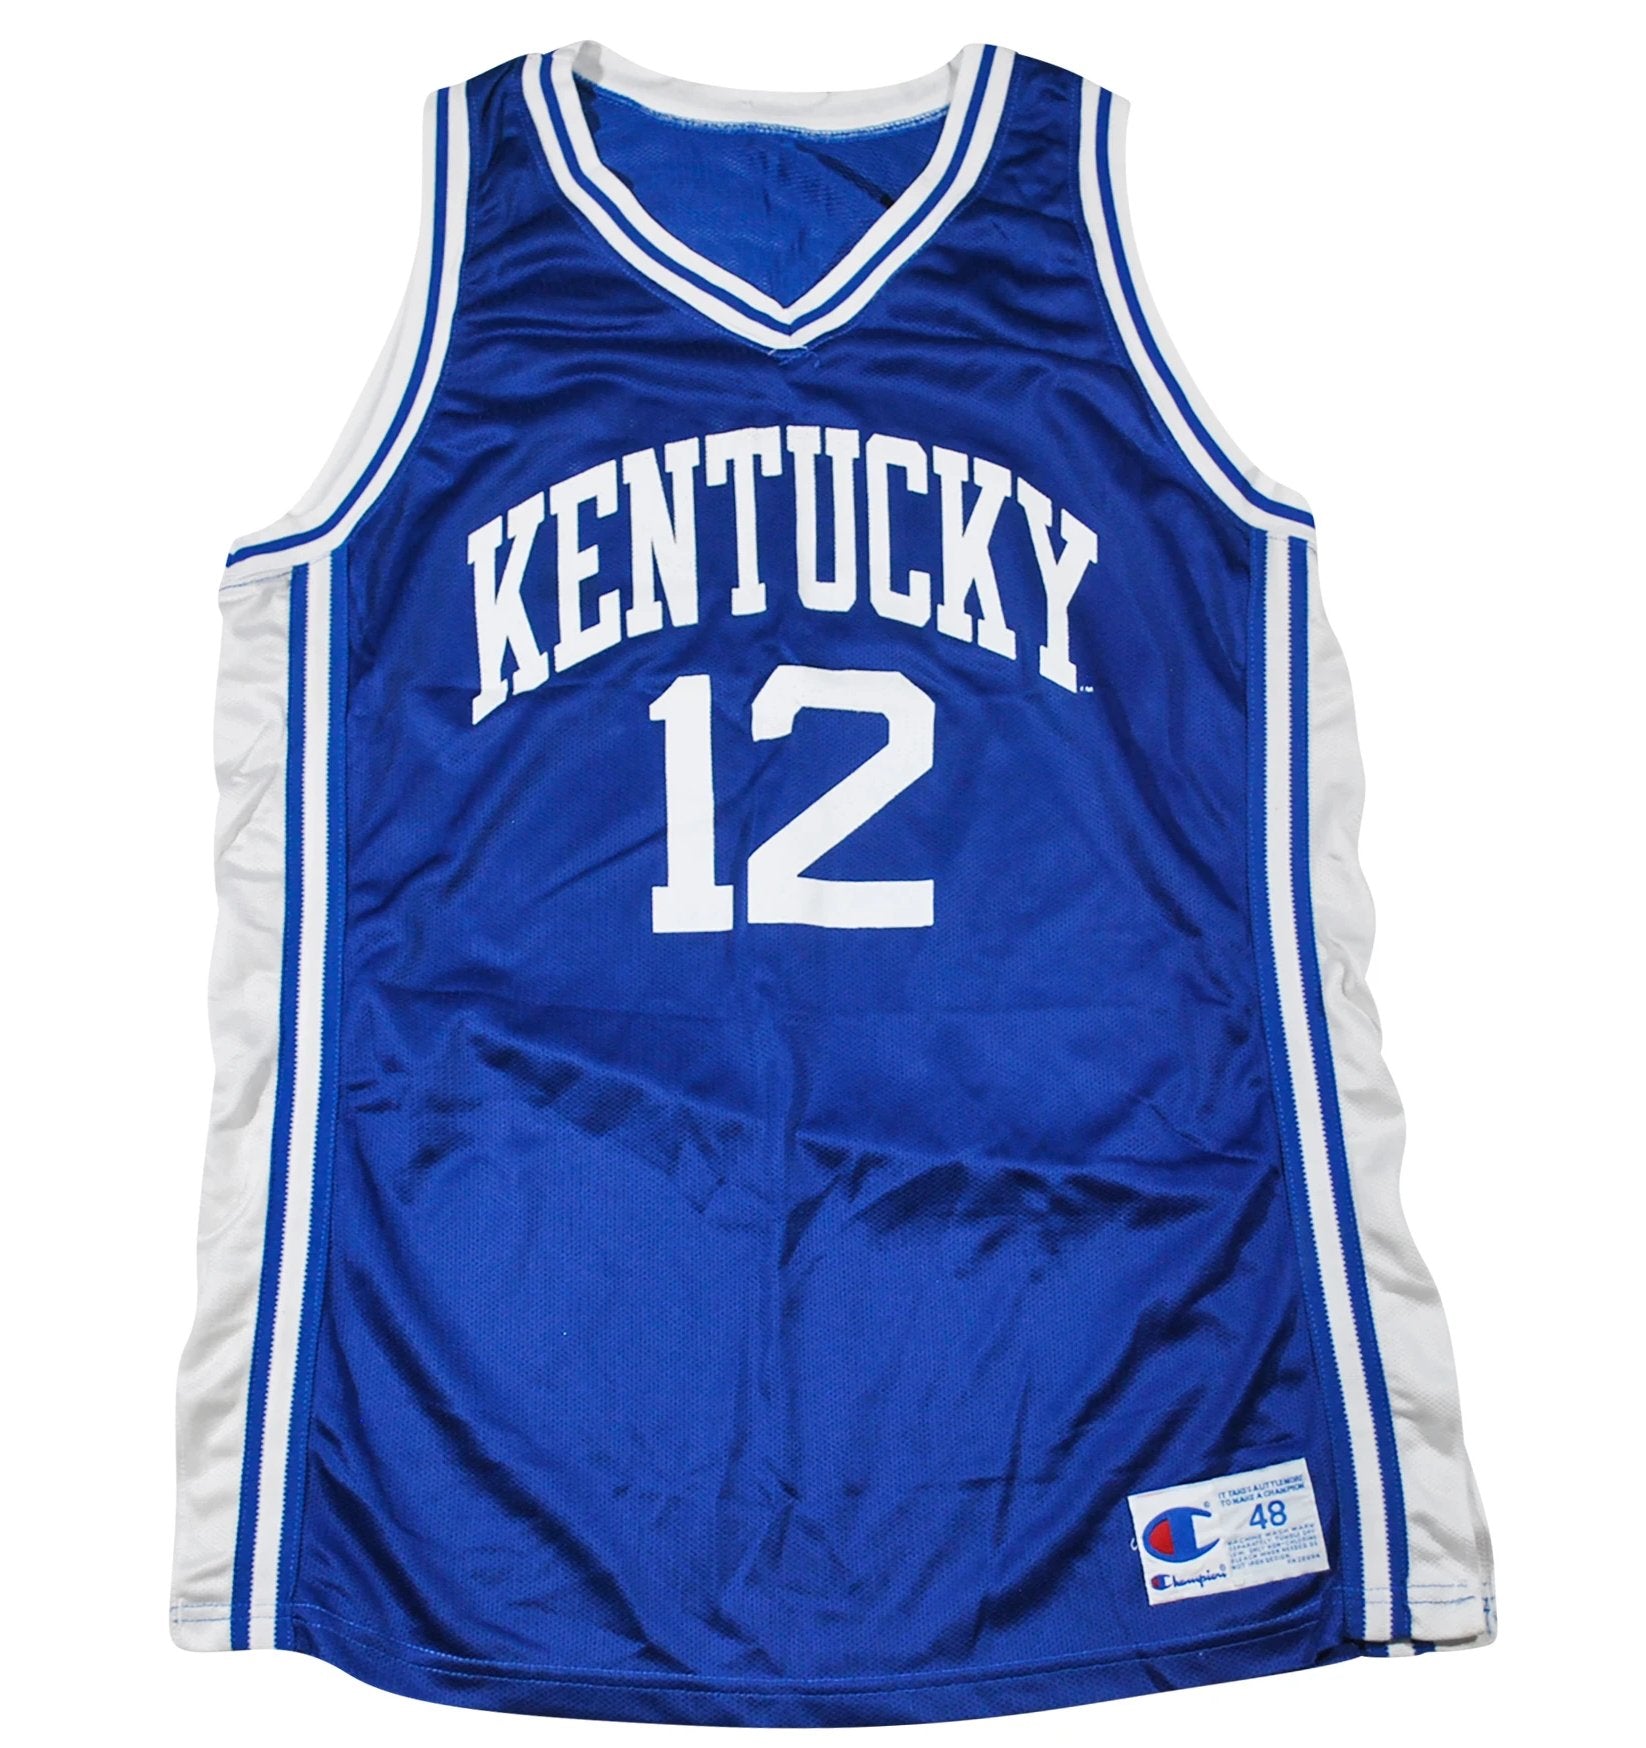 Vintage 90s Nike Kentucky Wildcats #15 Basketball Jersey Size